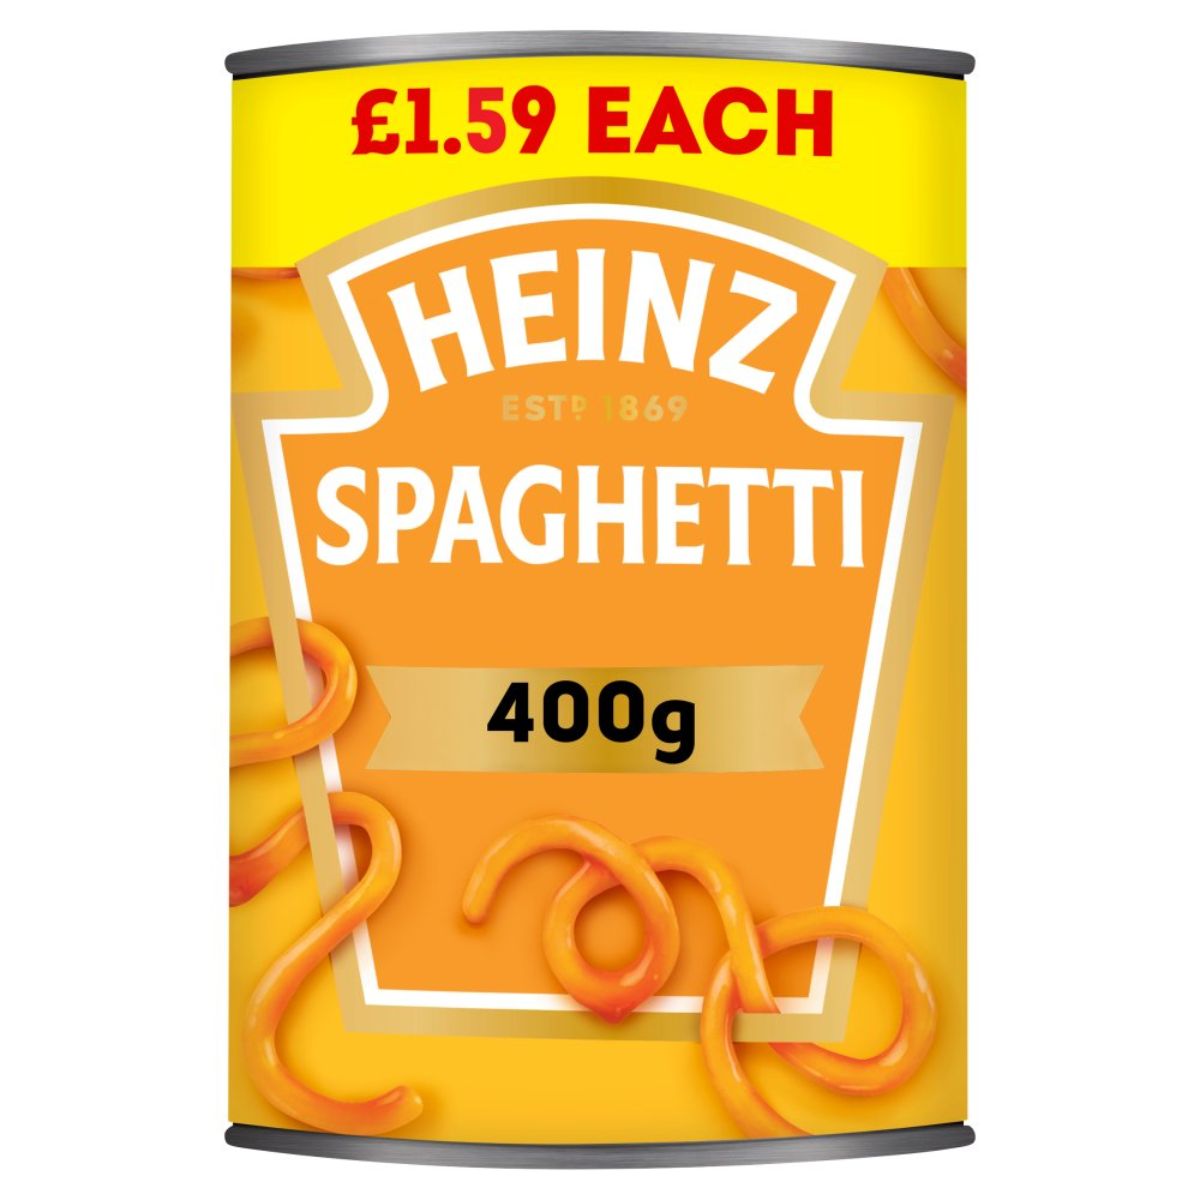 Heinz - Tinned Spaghetti - 400g can.